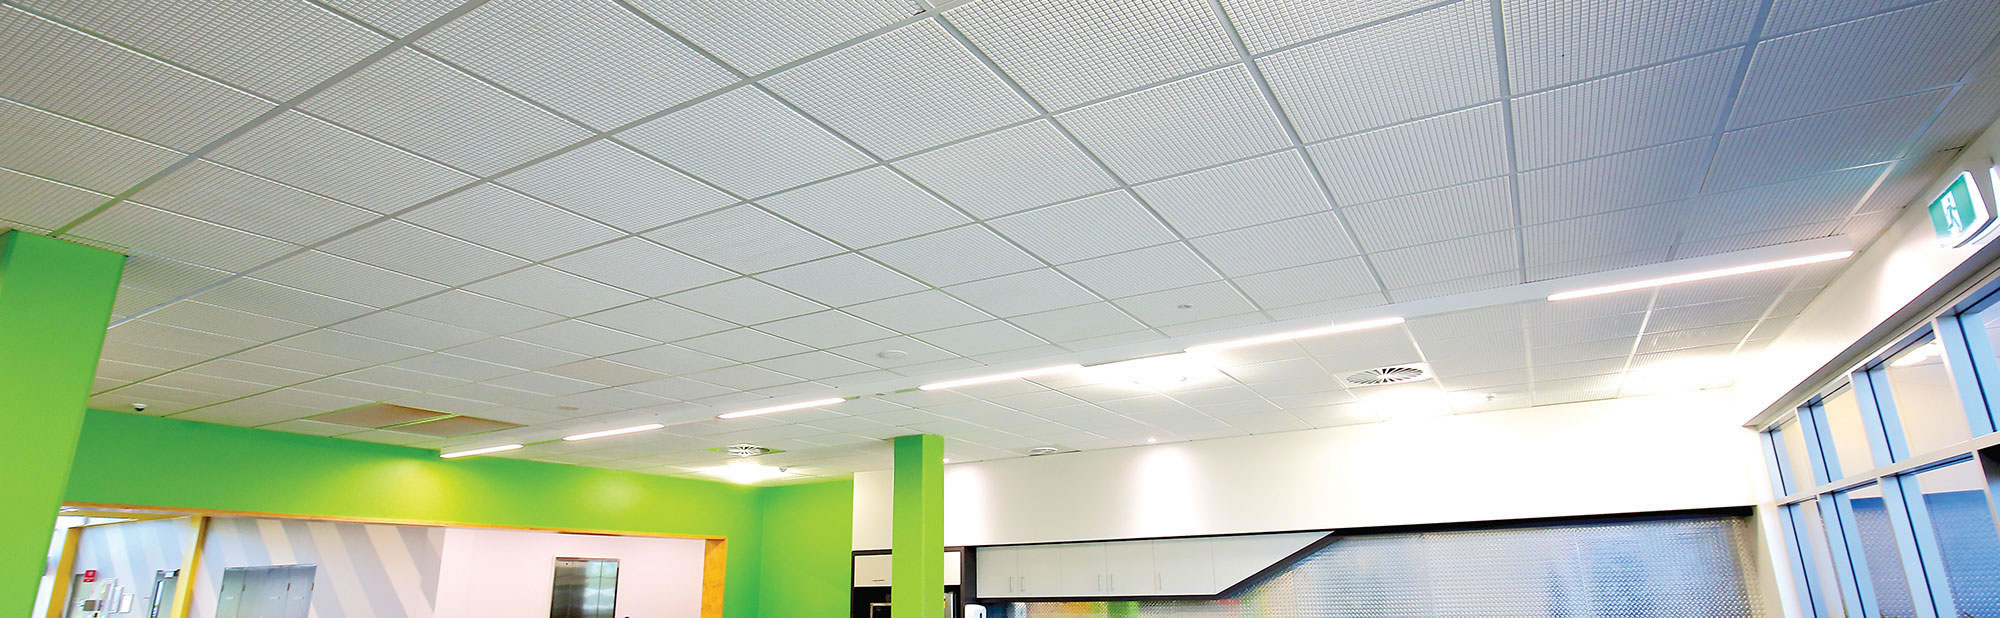 Acoustic Ceiling Tiles for Commercial Applications | Australian Plaster